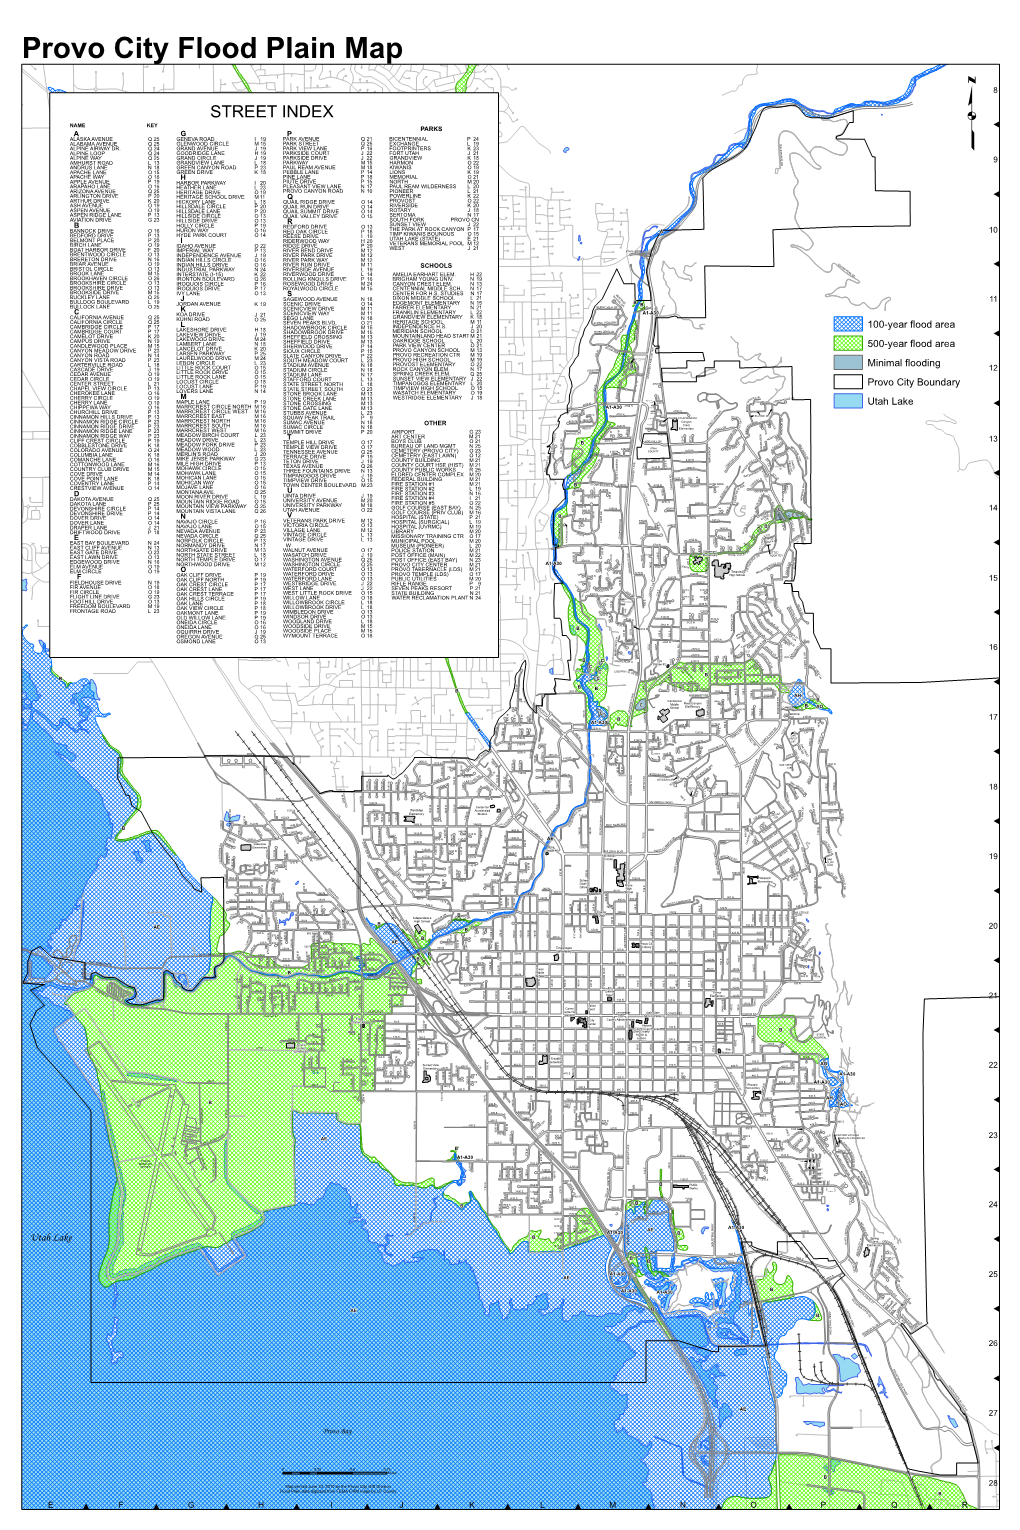 Provo City Flood Plain Map